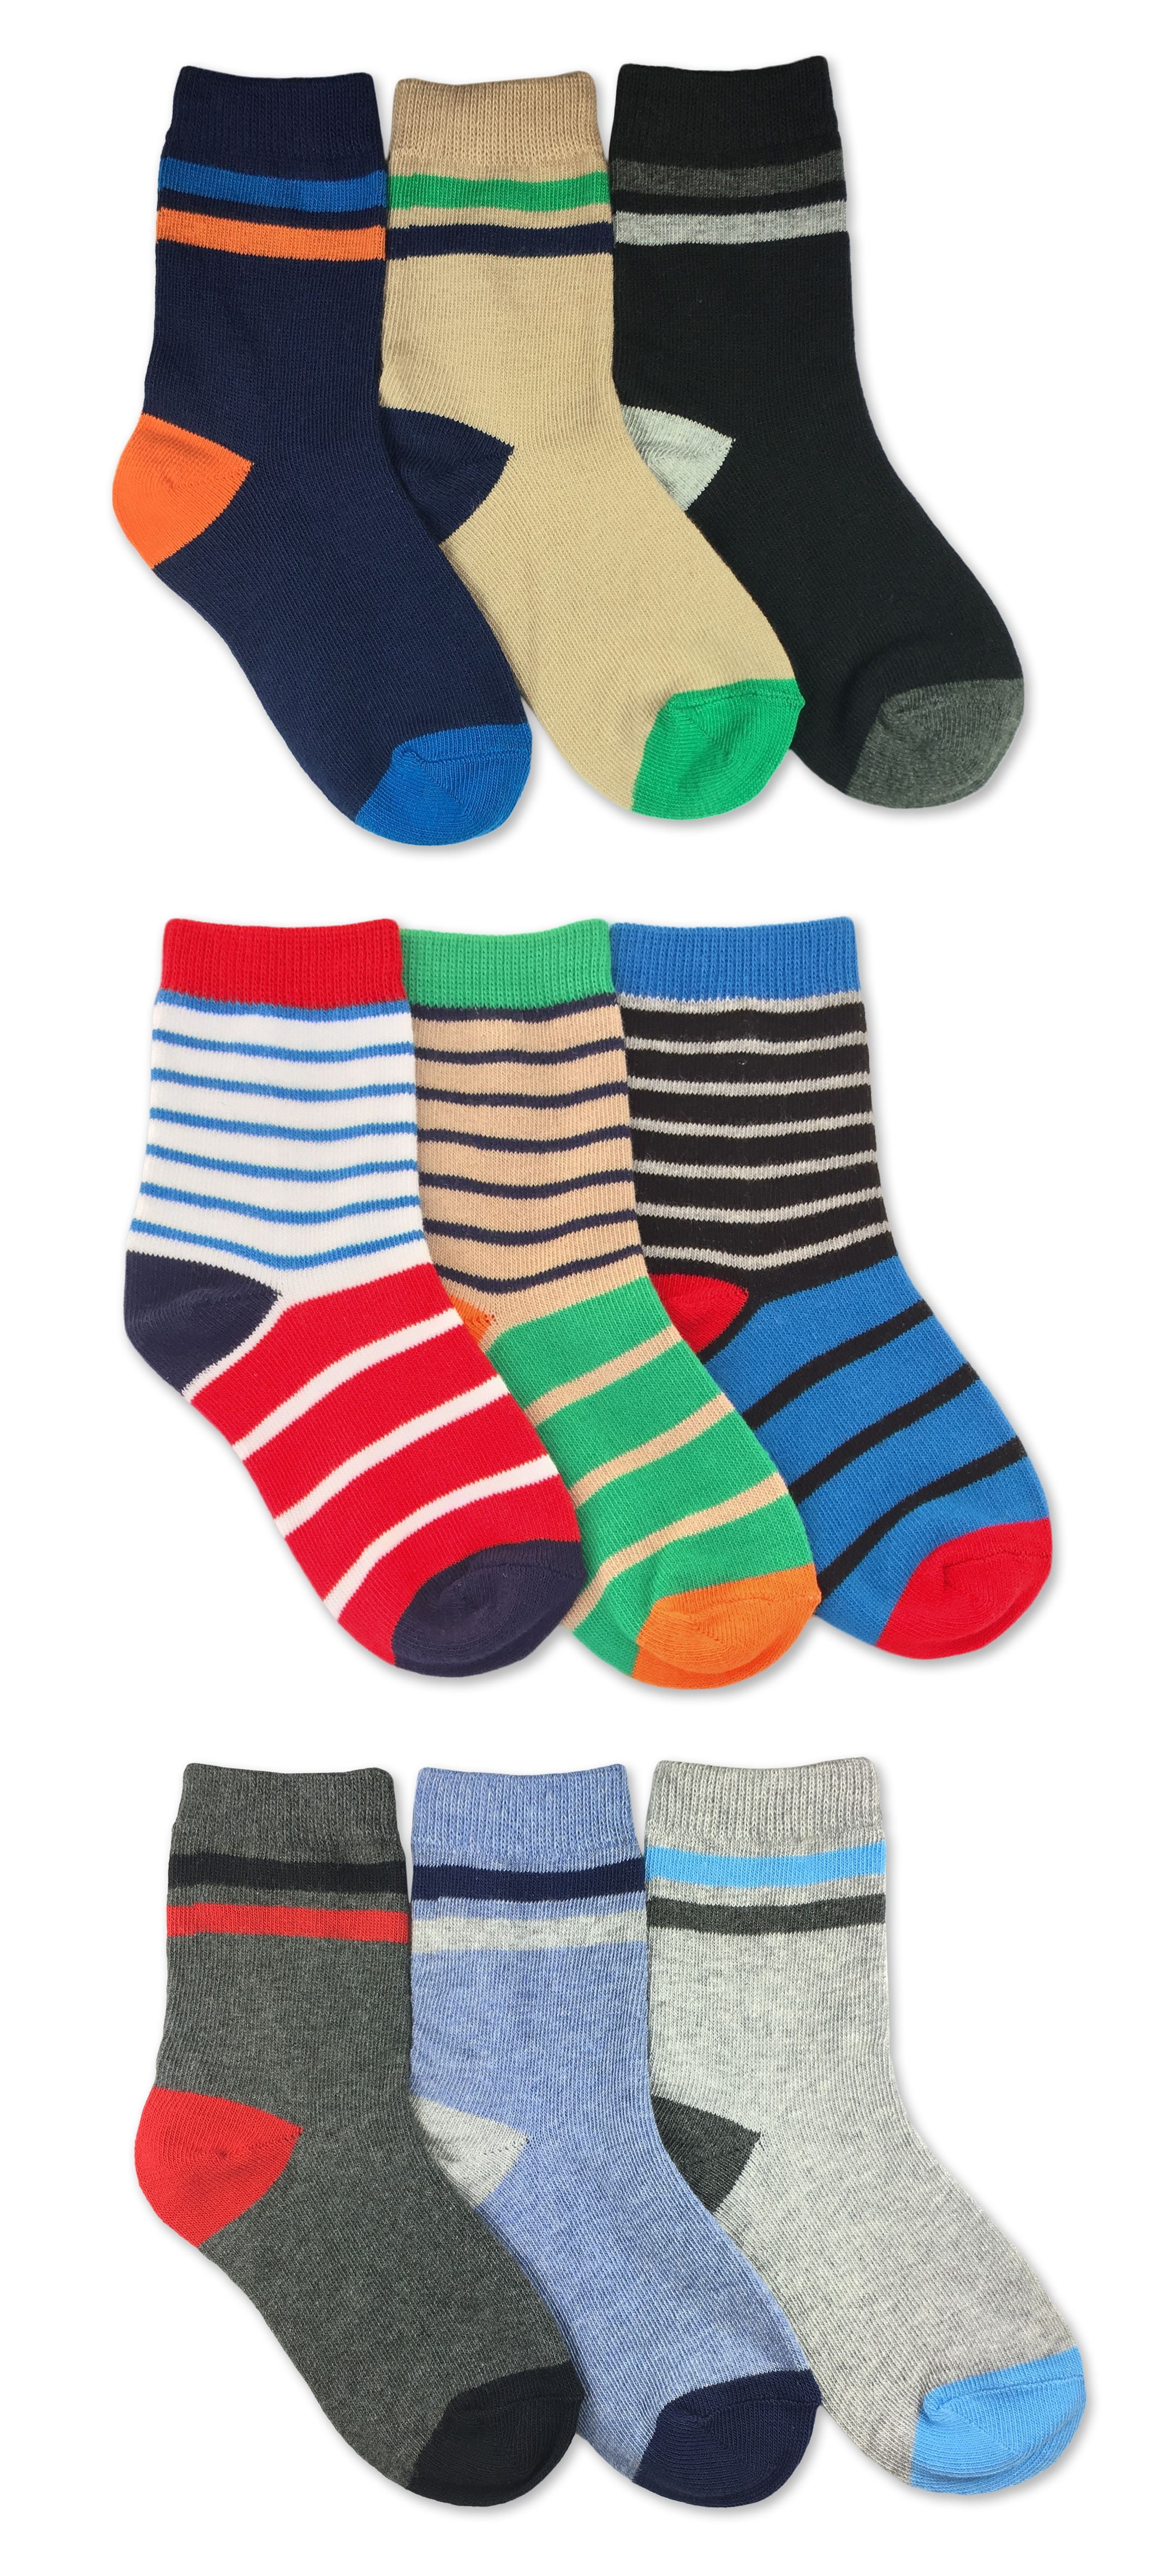 Girls 6 Pairs Tropical Print Trainer Cotton Rich socks sz 6-8 9-12 12-3 Age 2-10 